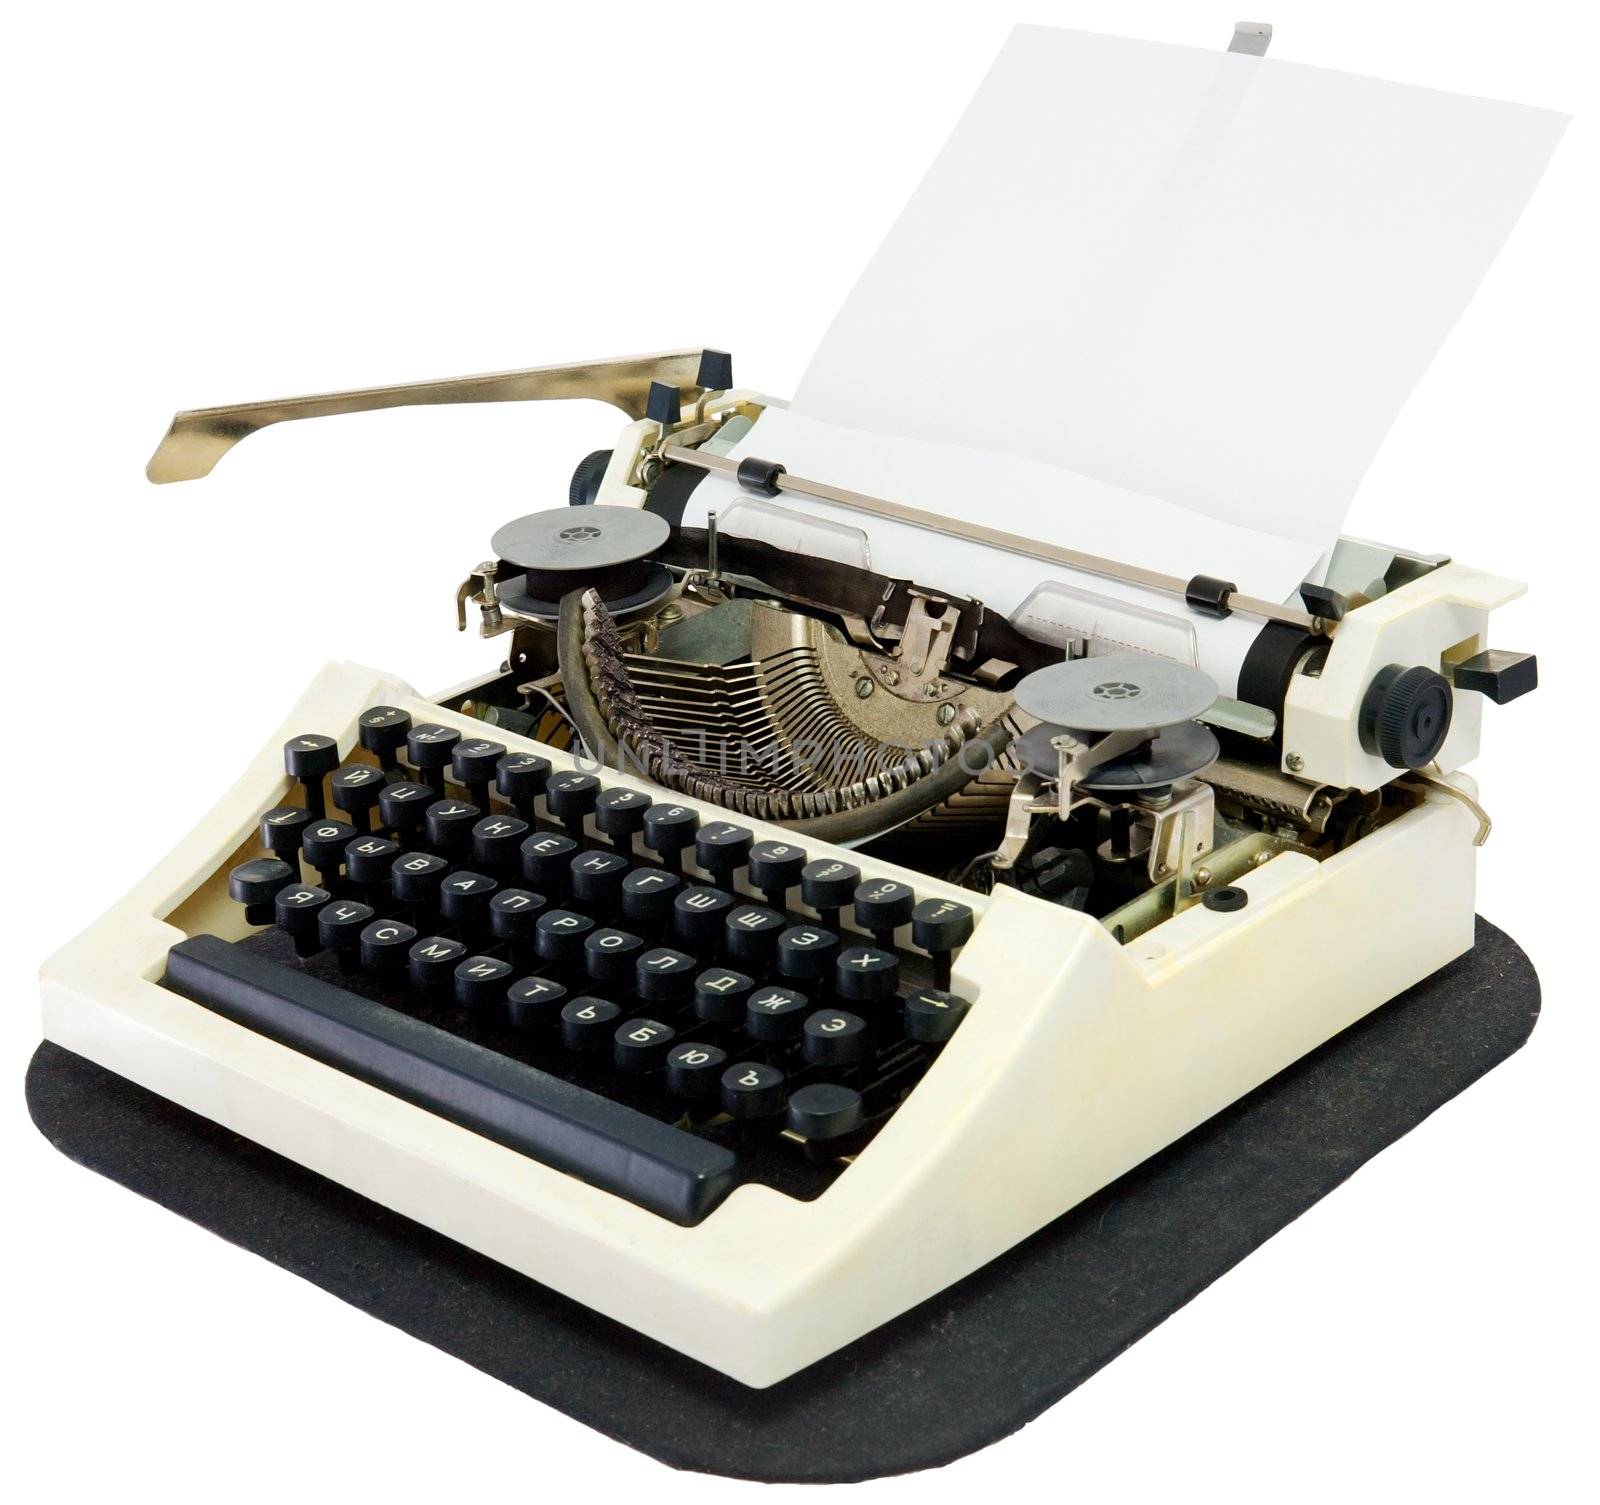 Typewriter by pzaxe